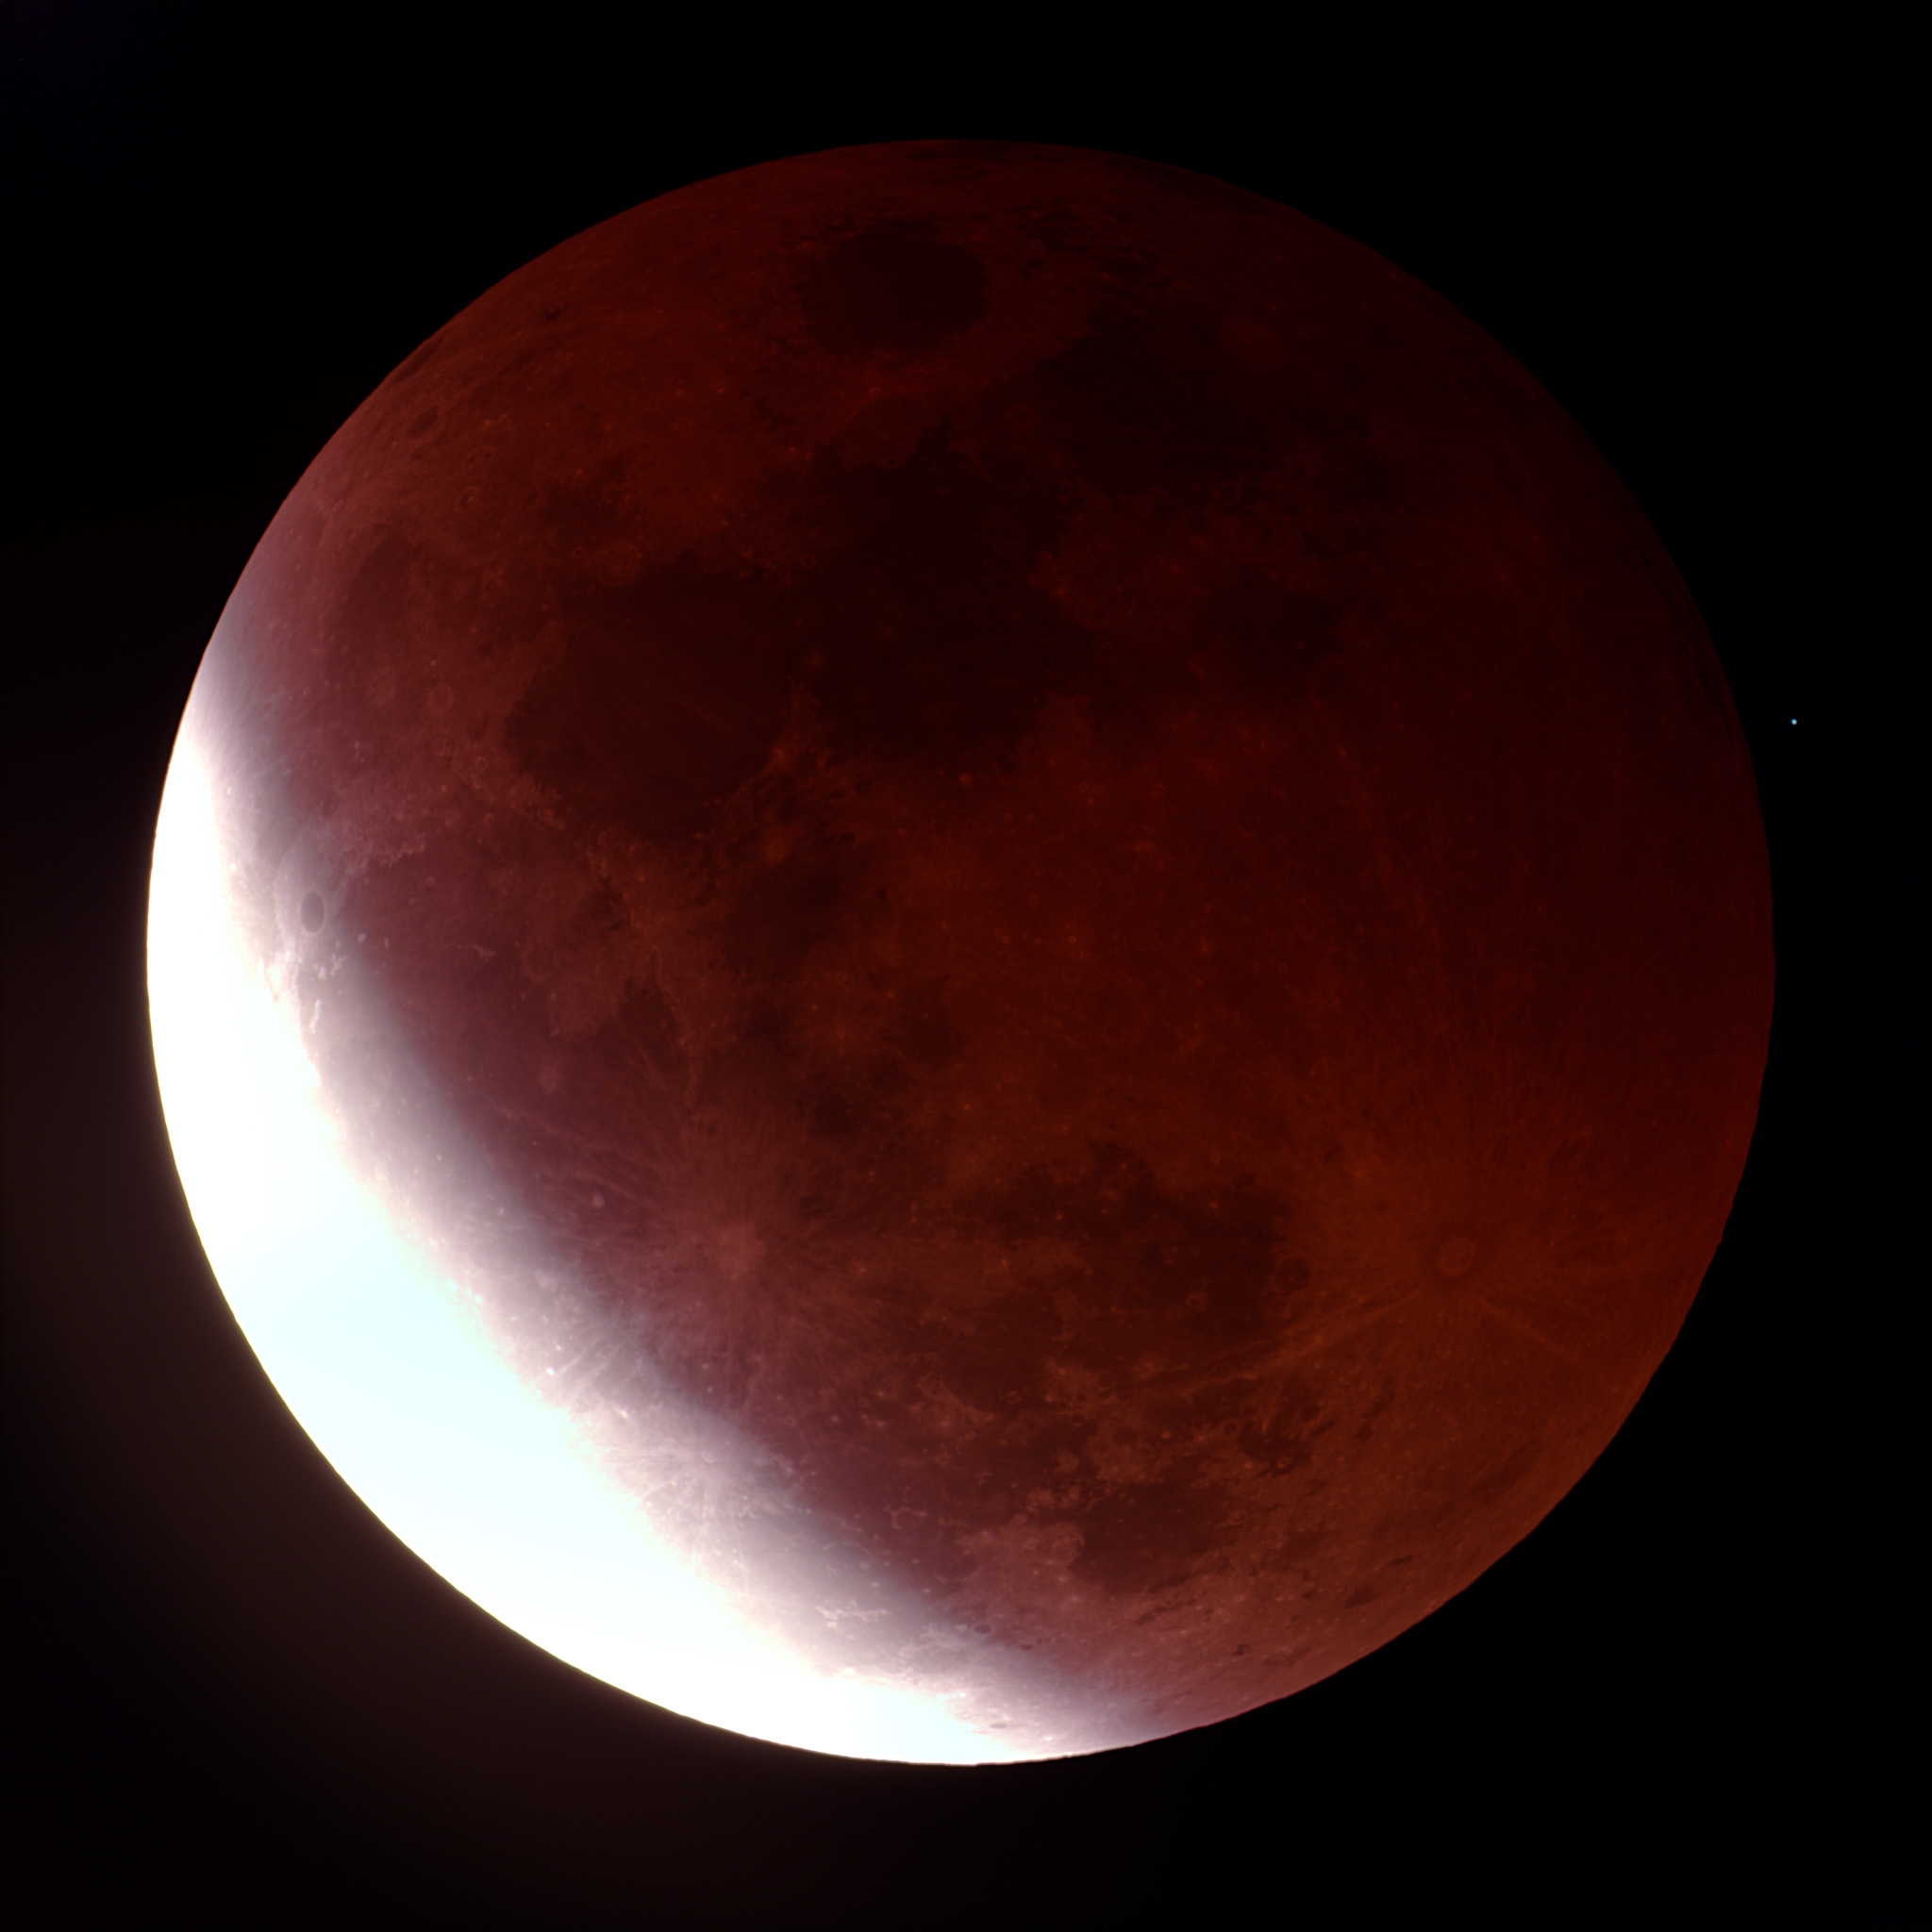 Page(/bonus/20221109_lunar_eclipse_uranus/index.md)